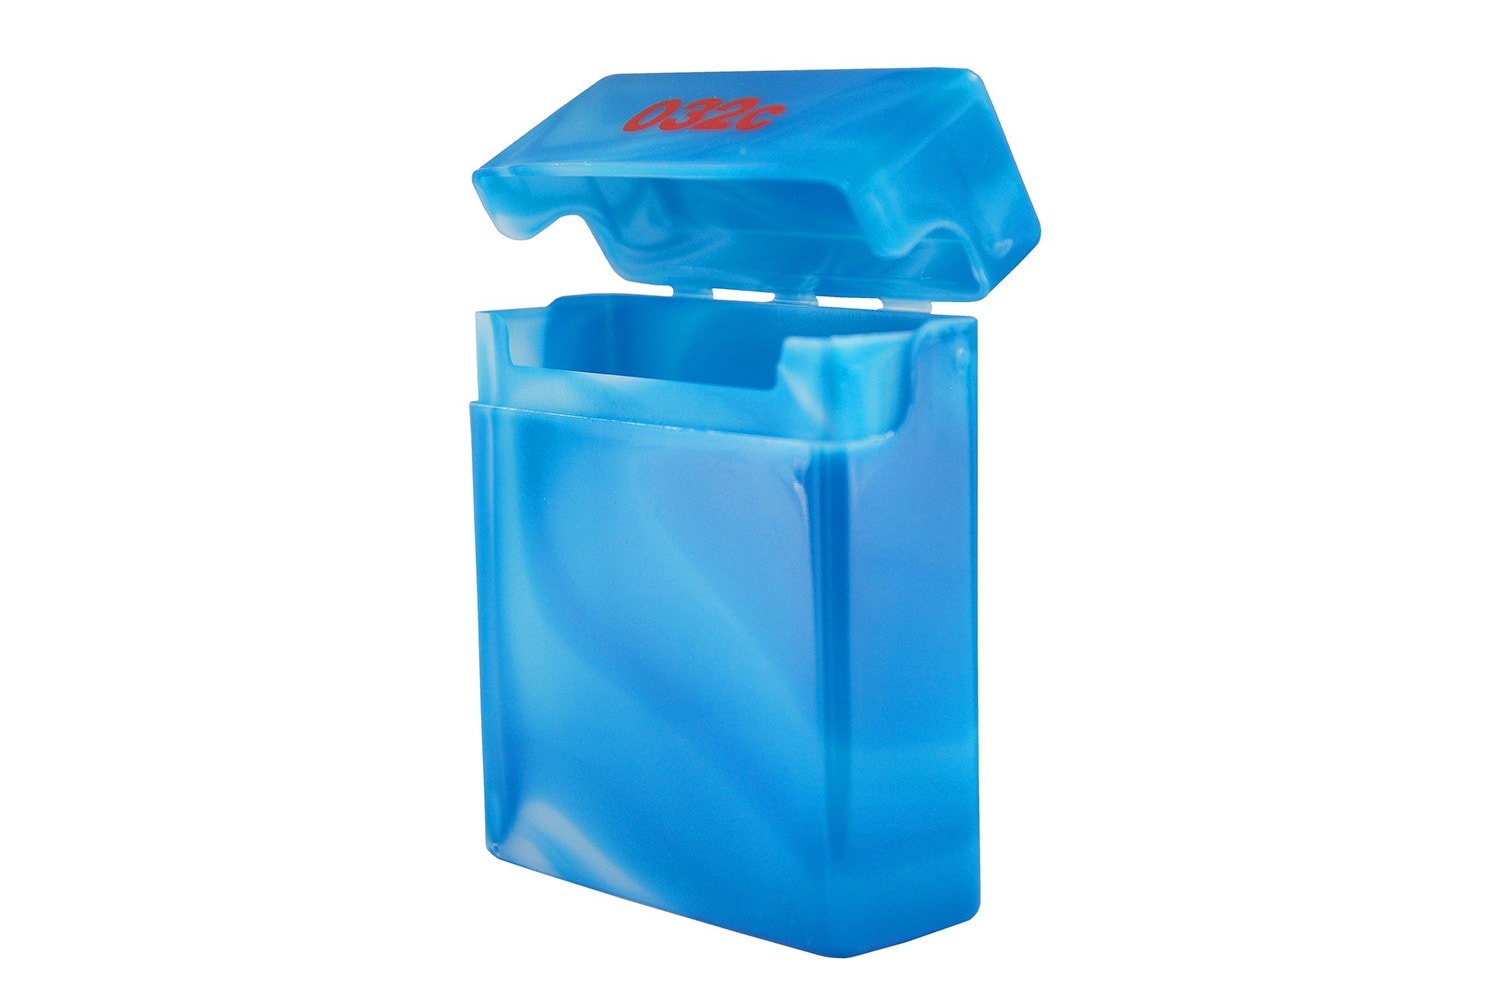 《032c》推出全新藍色香煙盒配飾